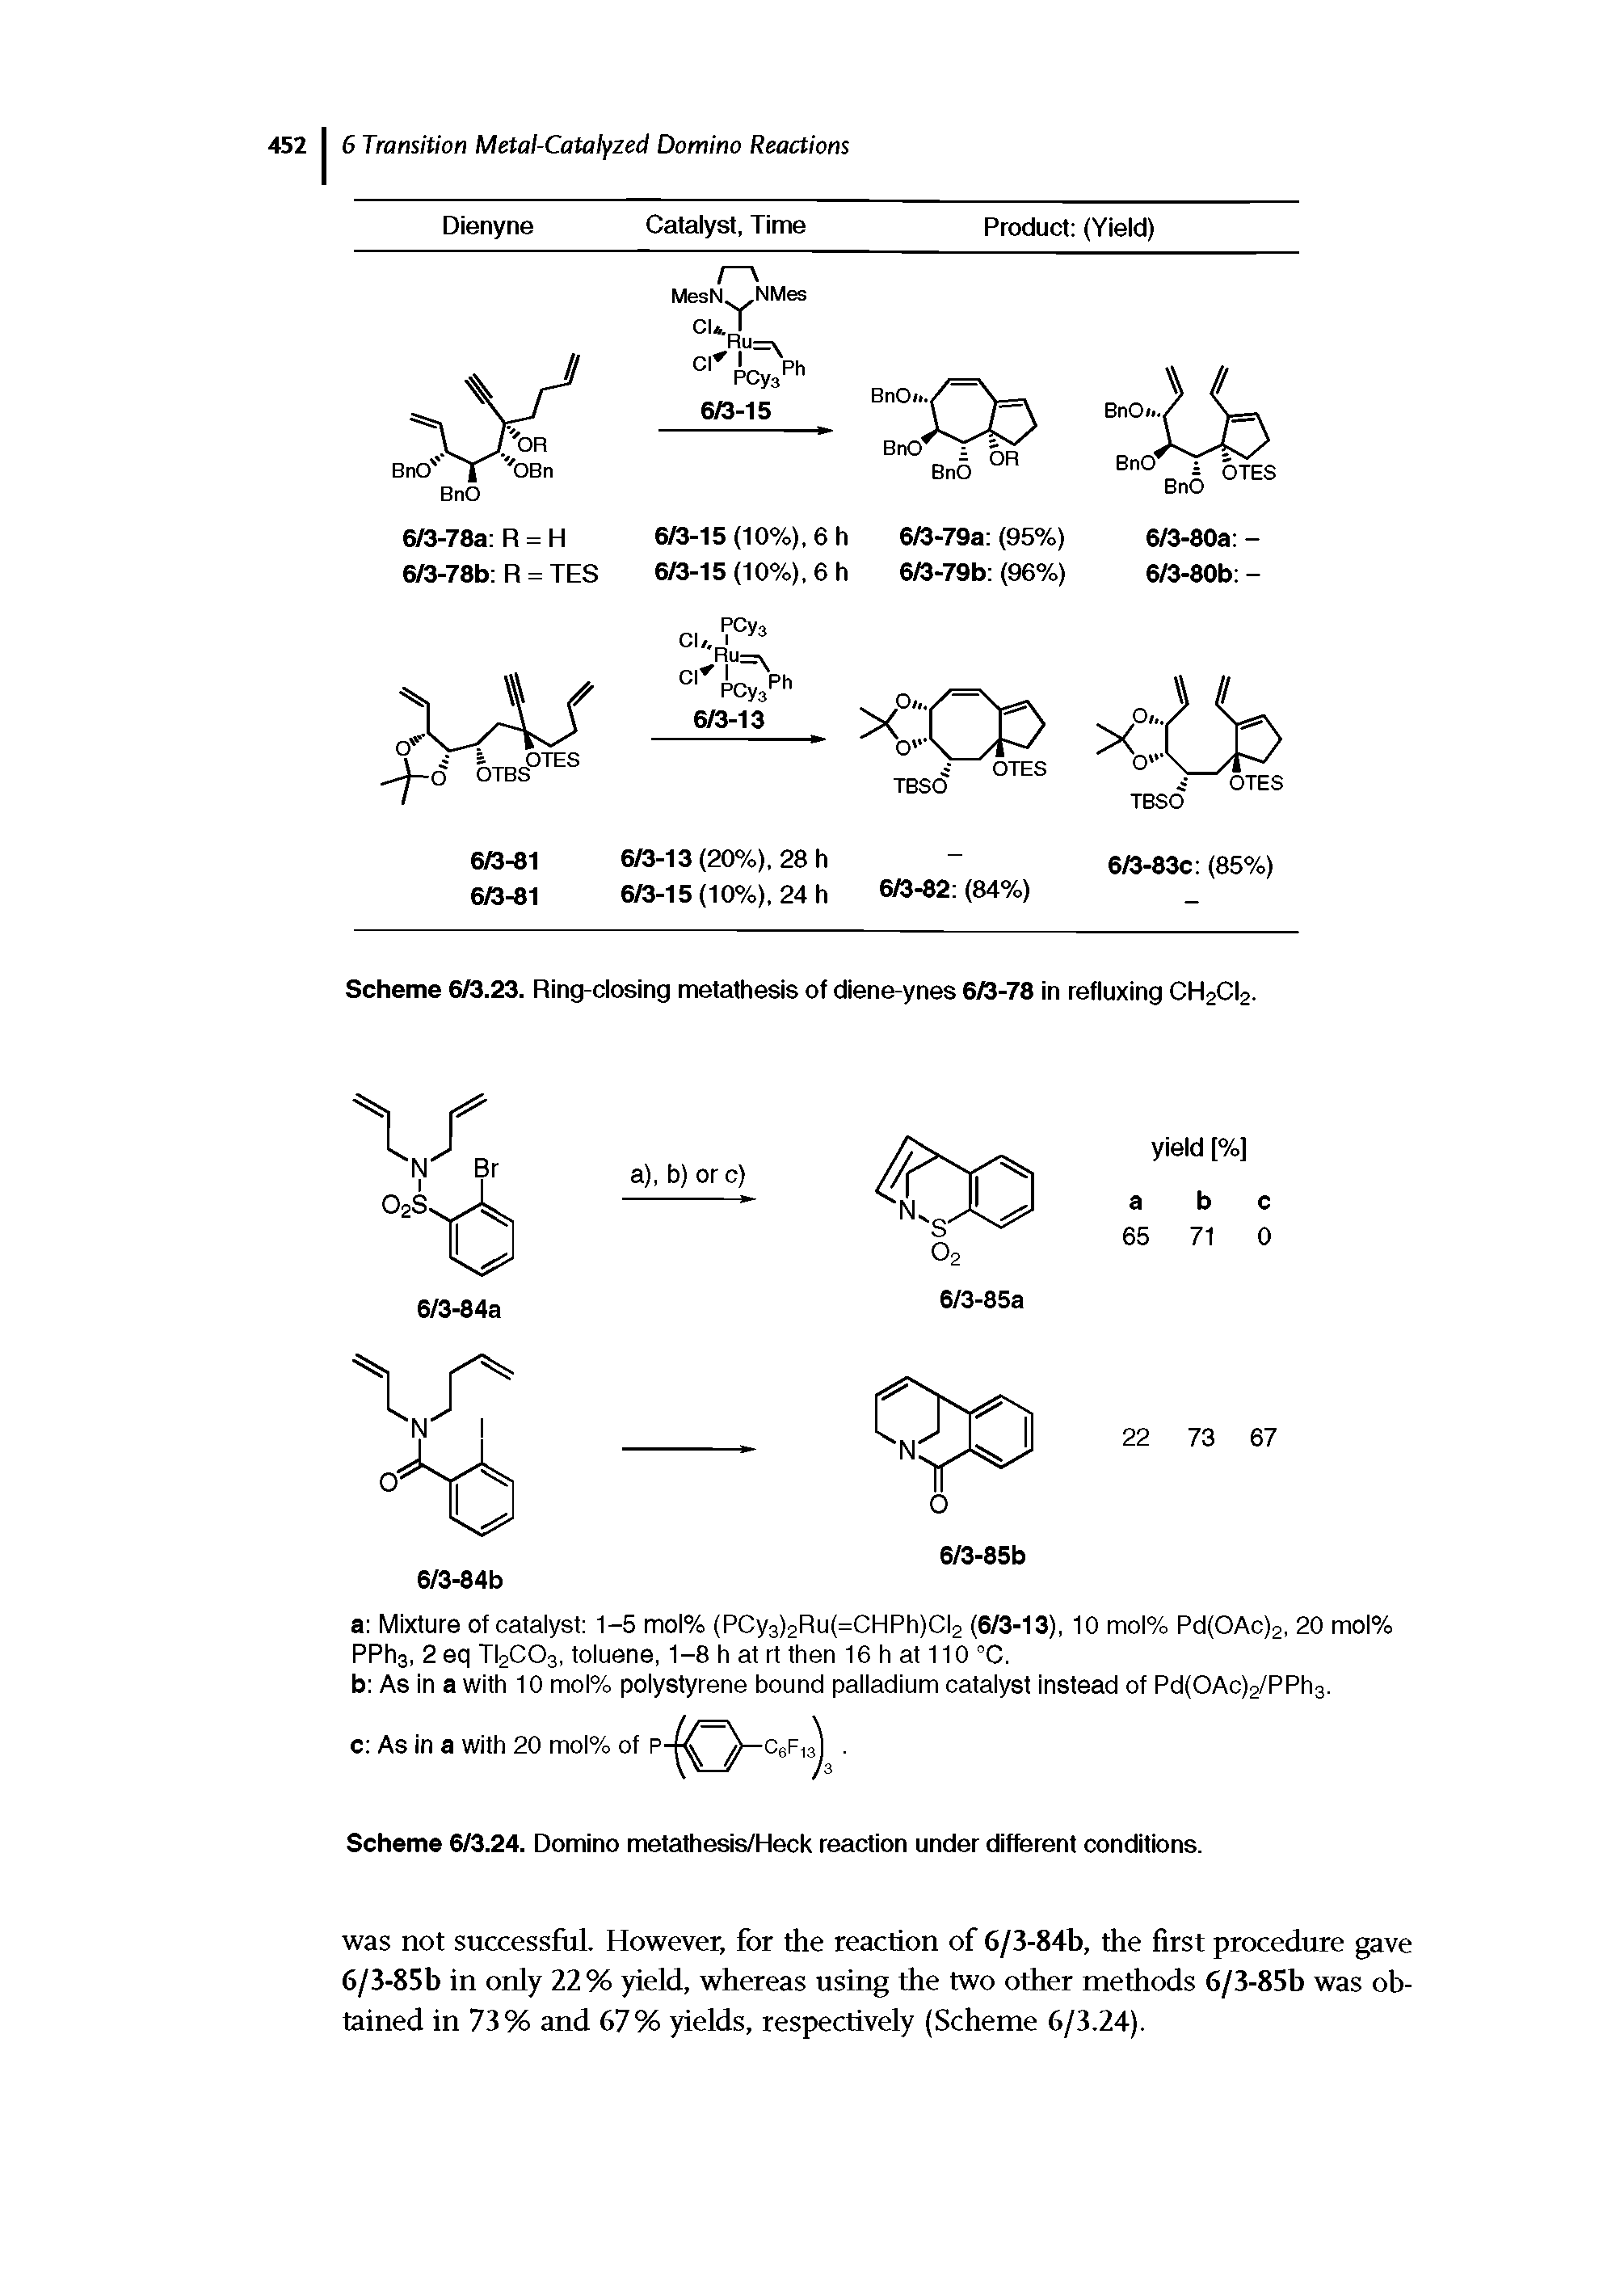 Scheme 6/3.24. Domino metathesis/Heck reaction under different conditions.